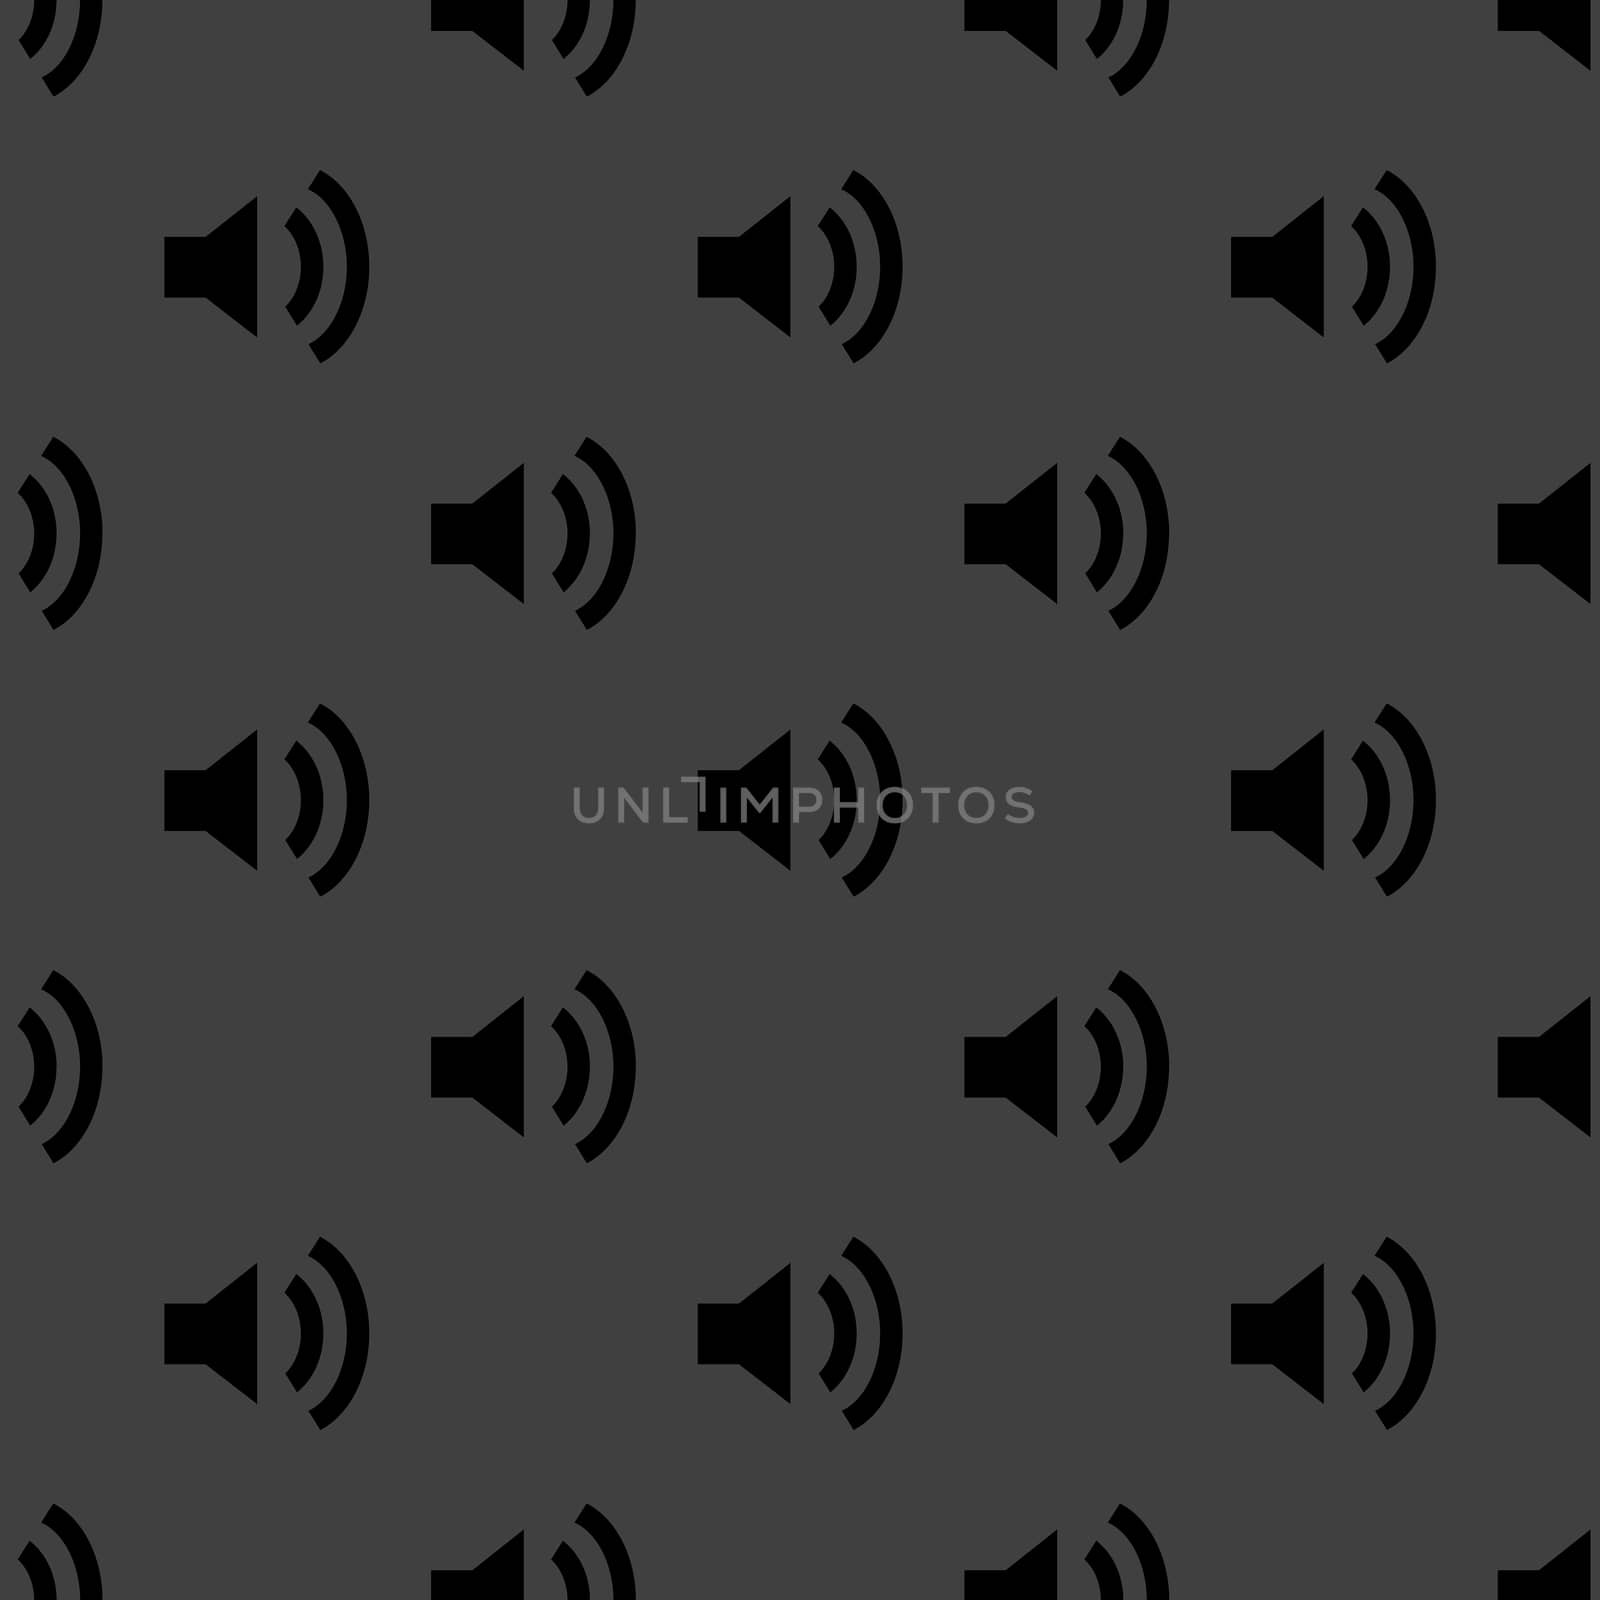 Speaker web icon flat design. Seamless pattern.